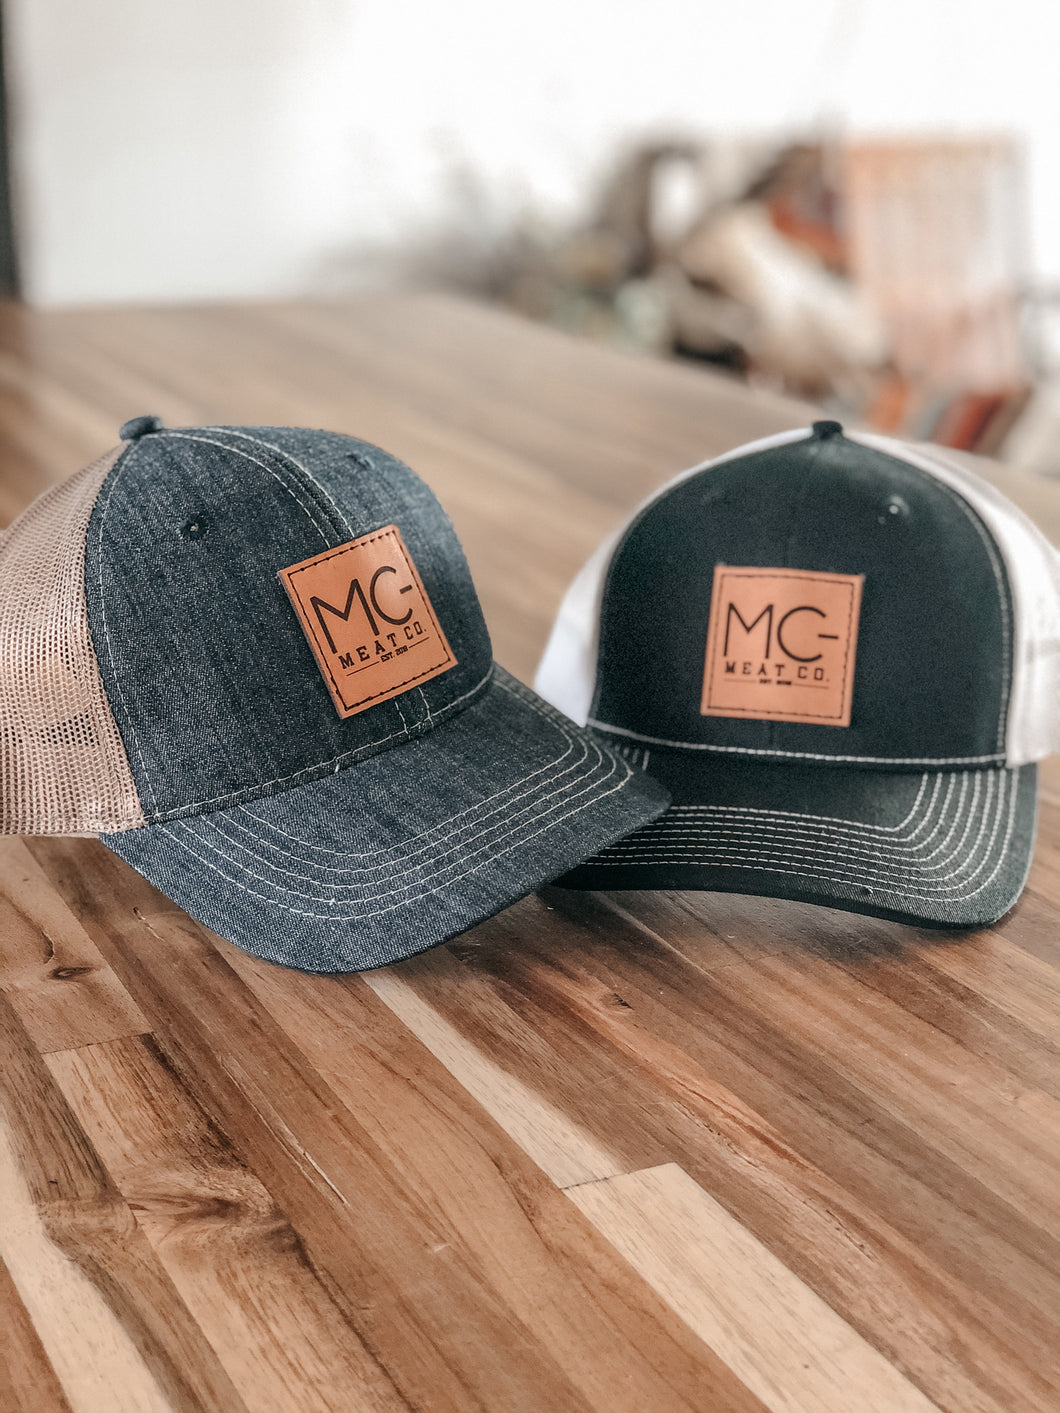 MC- Meat Co. Meshback Hats